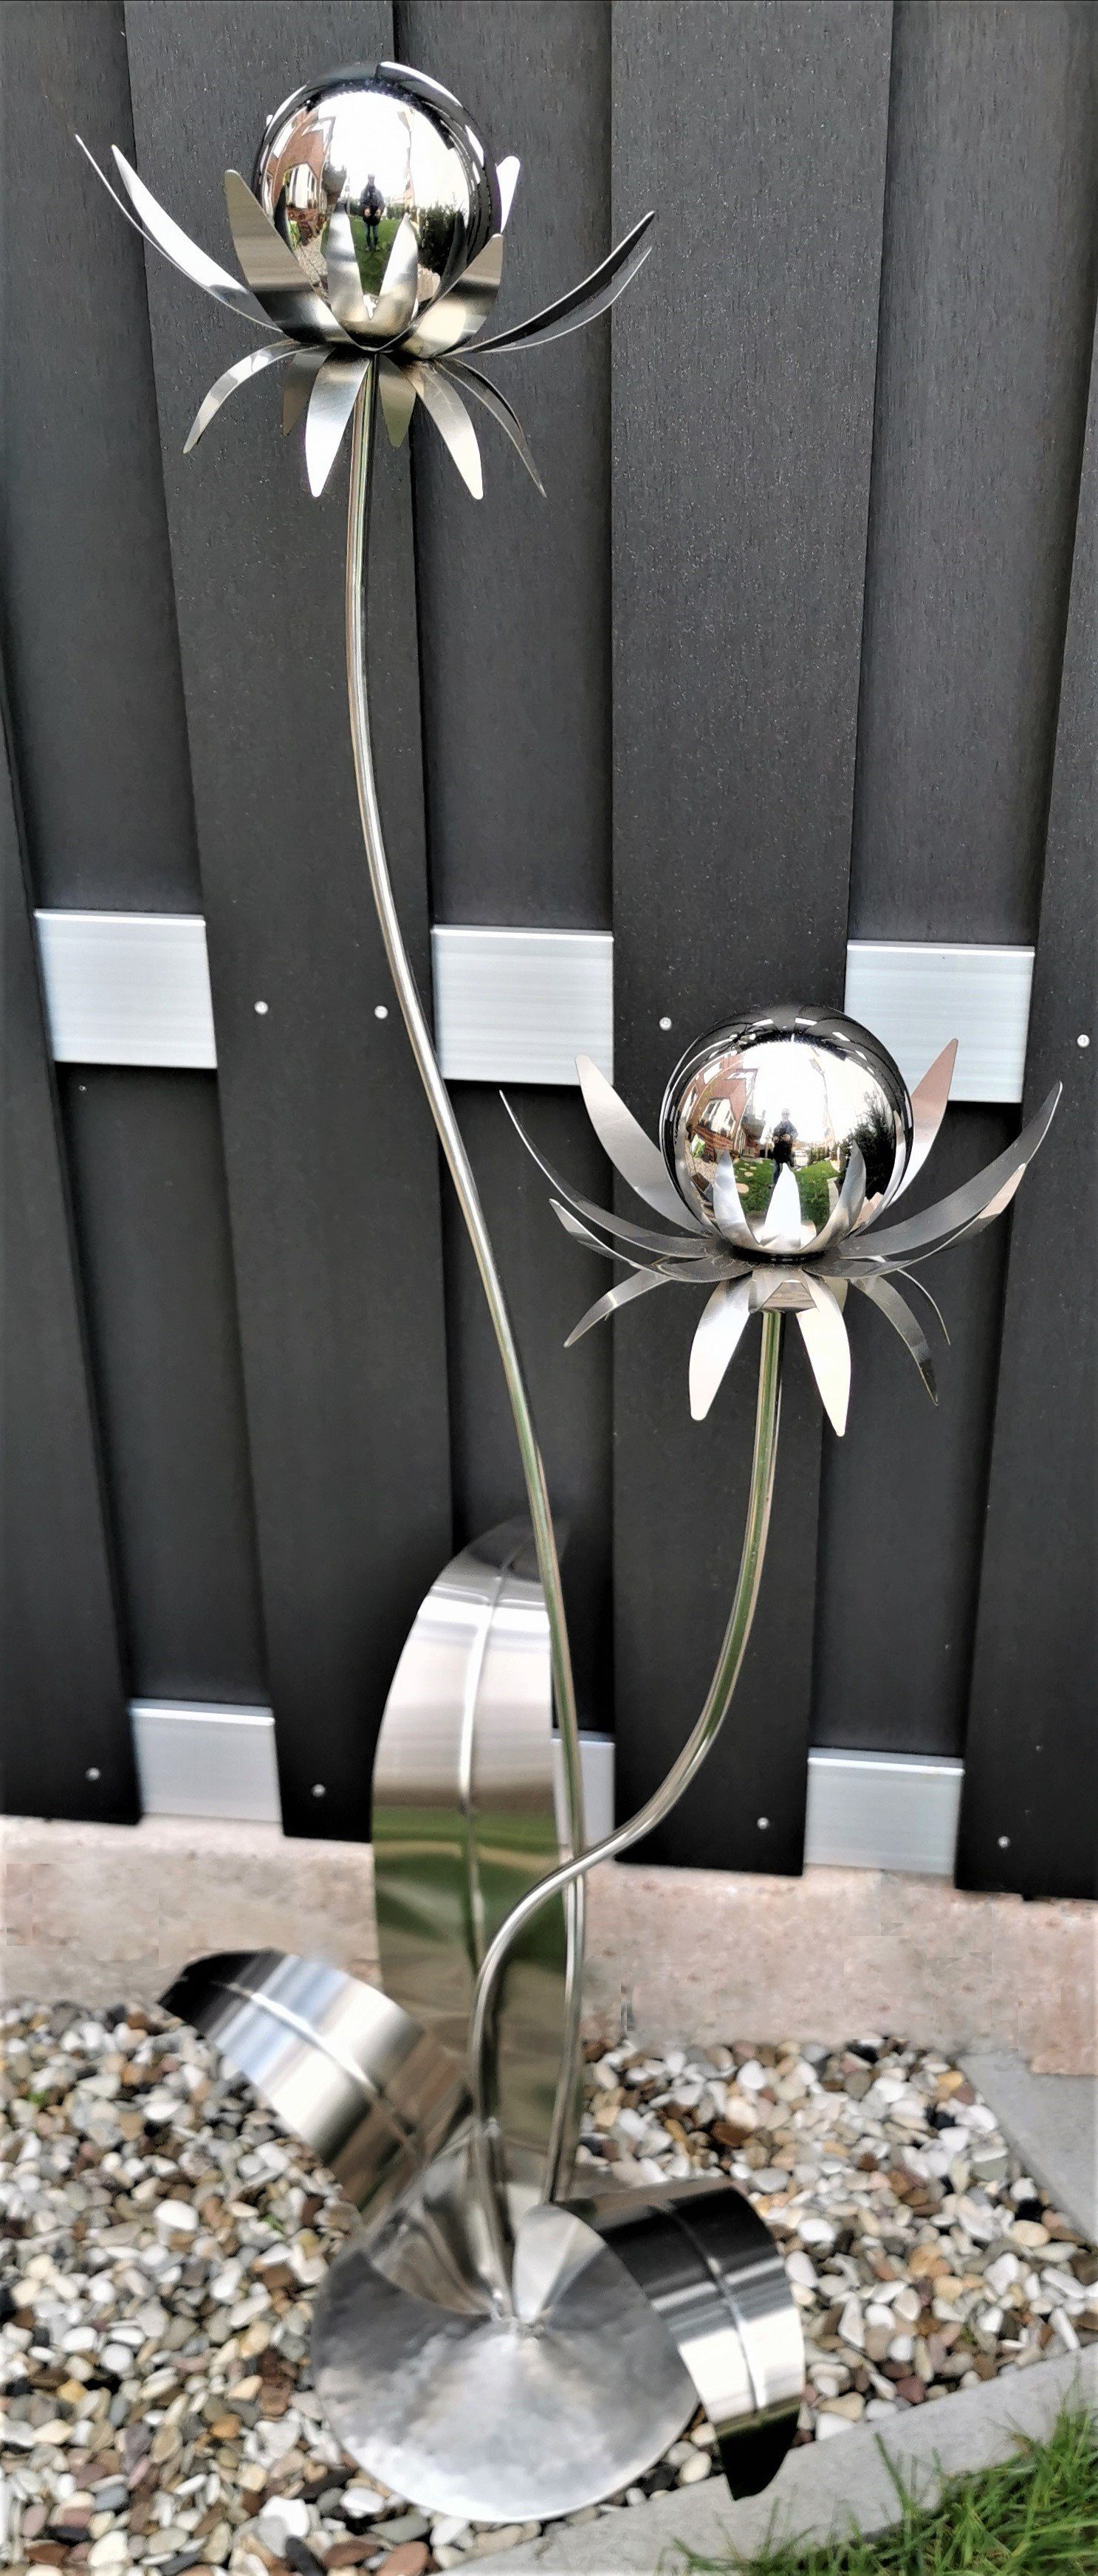 Jürgen Bocker Garten-Ambiente Gartenstecker Skulptur Blume Milano Edelstahl 120 cm Kugel Edelstahl poliert mit Standfuß Deko Gartendeko